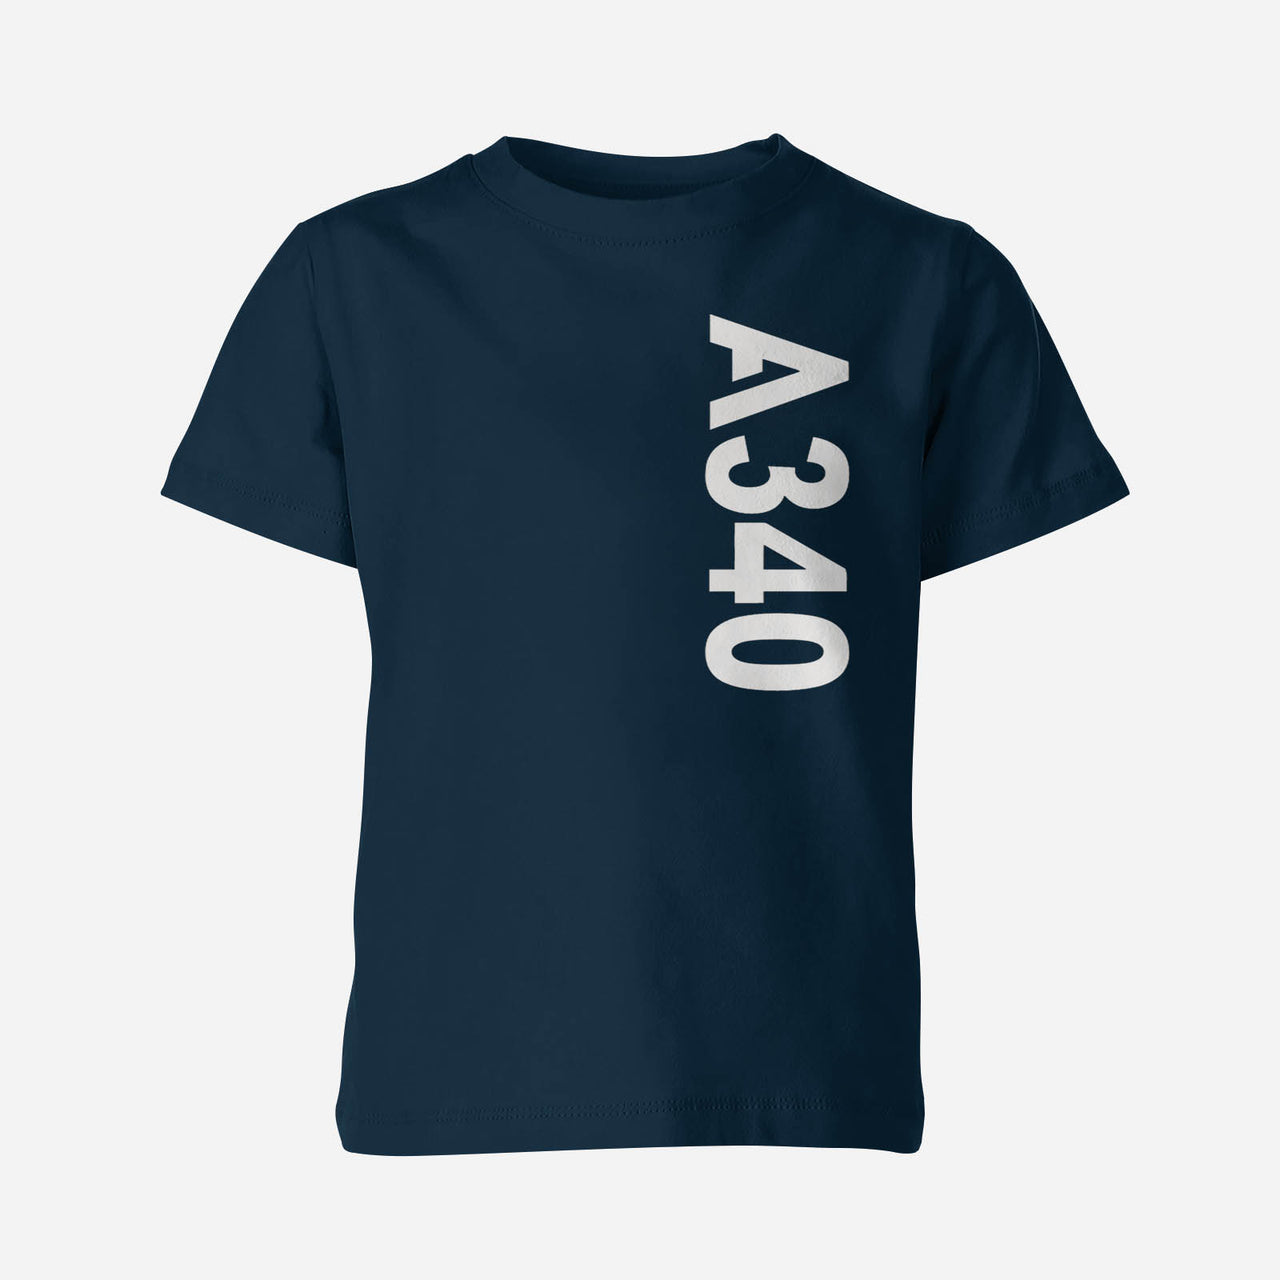 A340 Side Text Designed Children T-Shirts